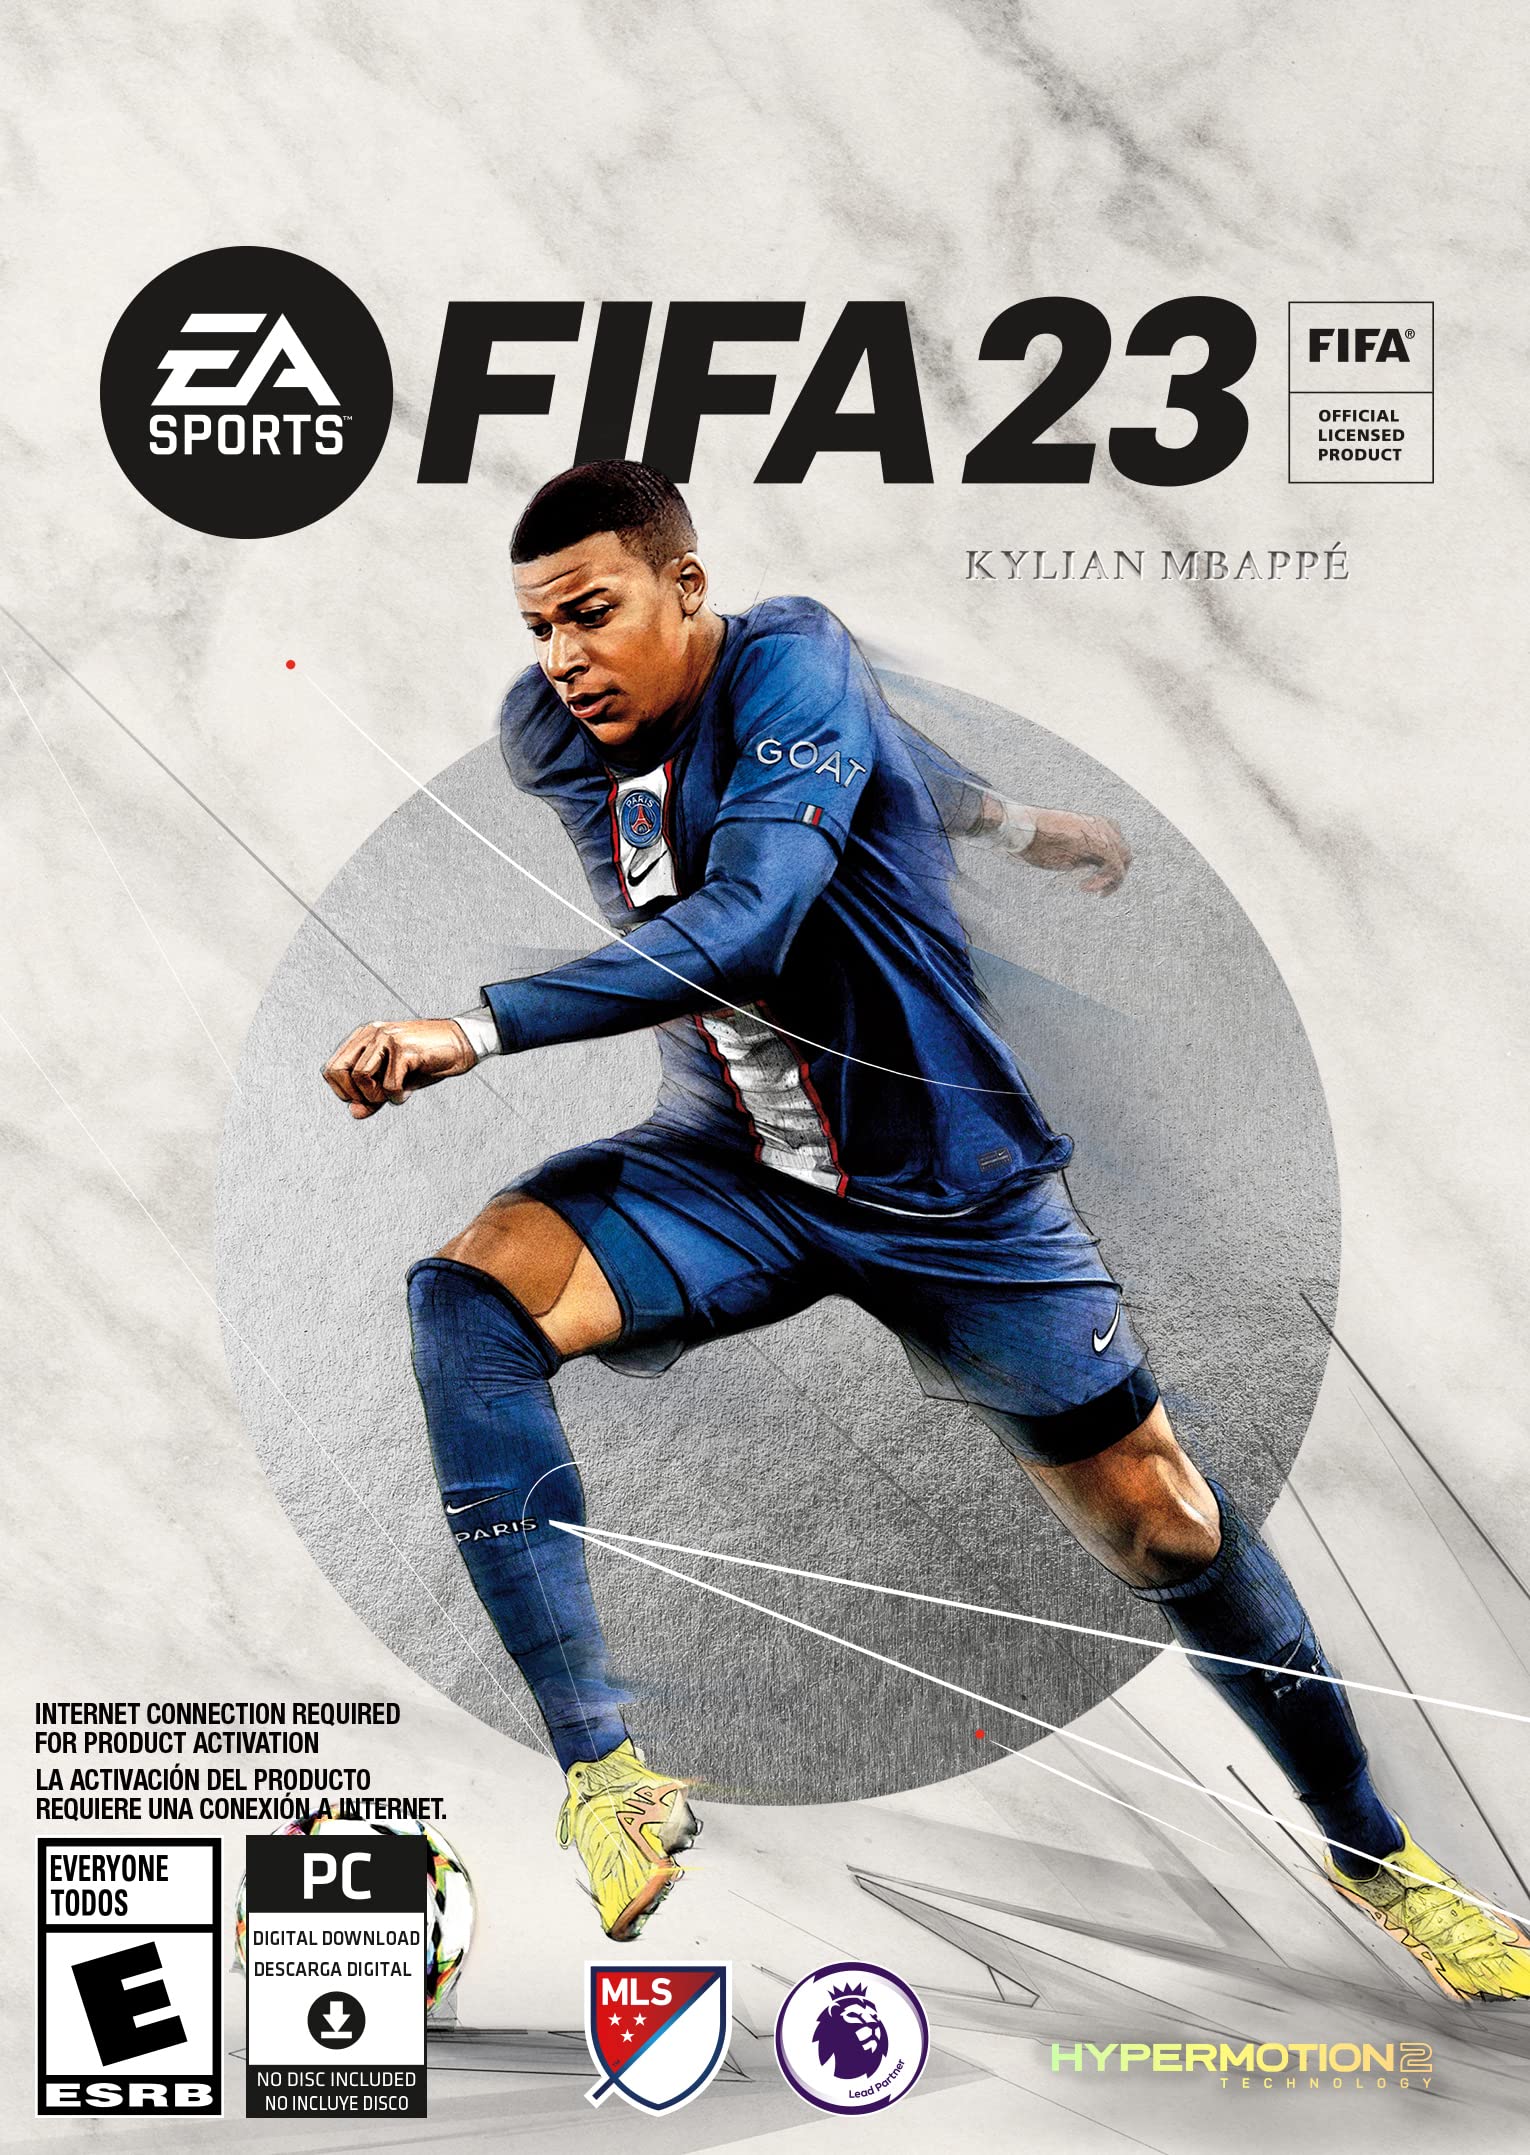 FIFA 23 - Steam PC Standard - PC [Online Game Code]